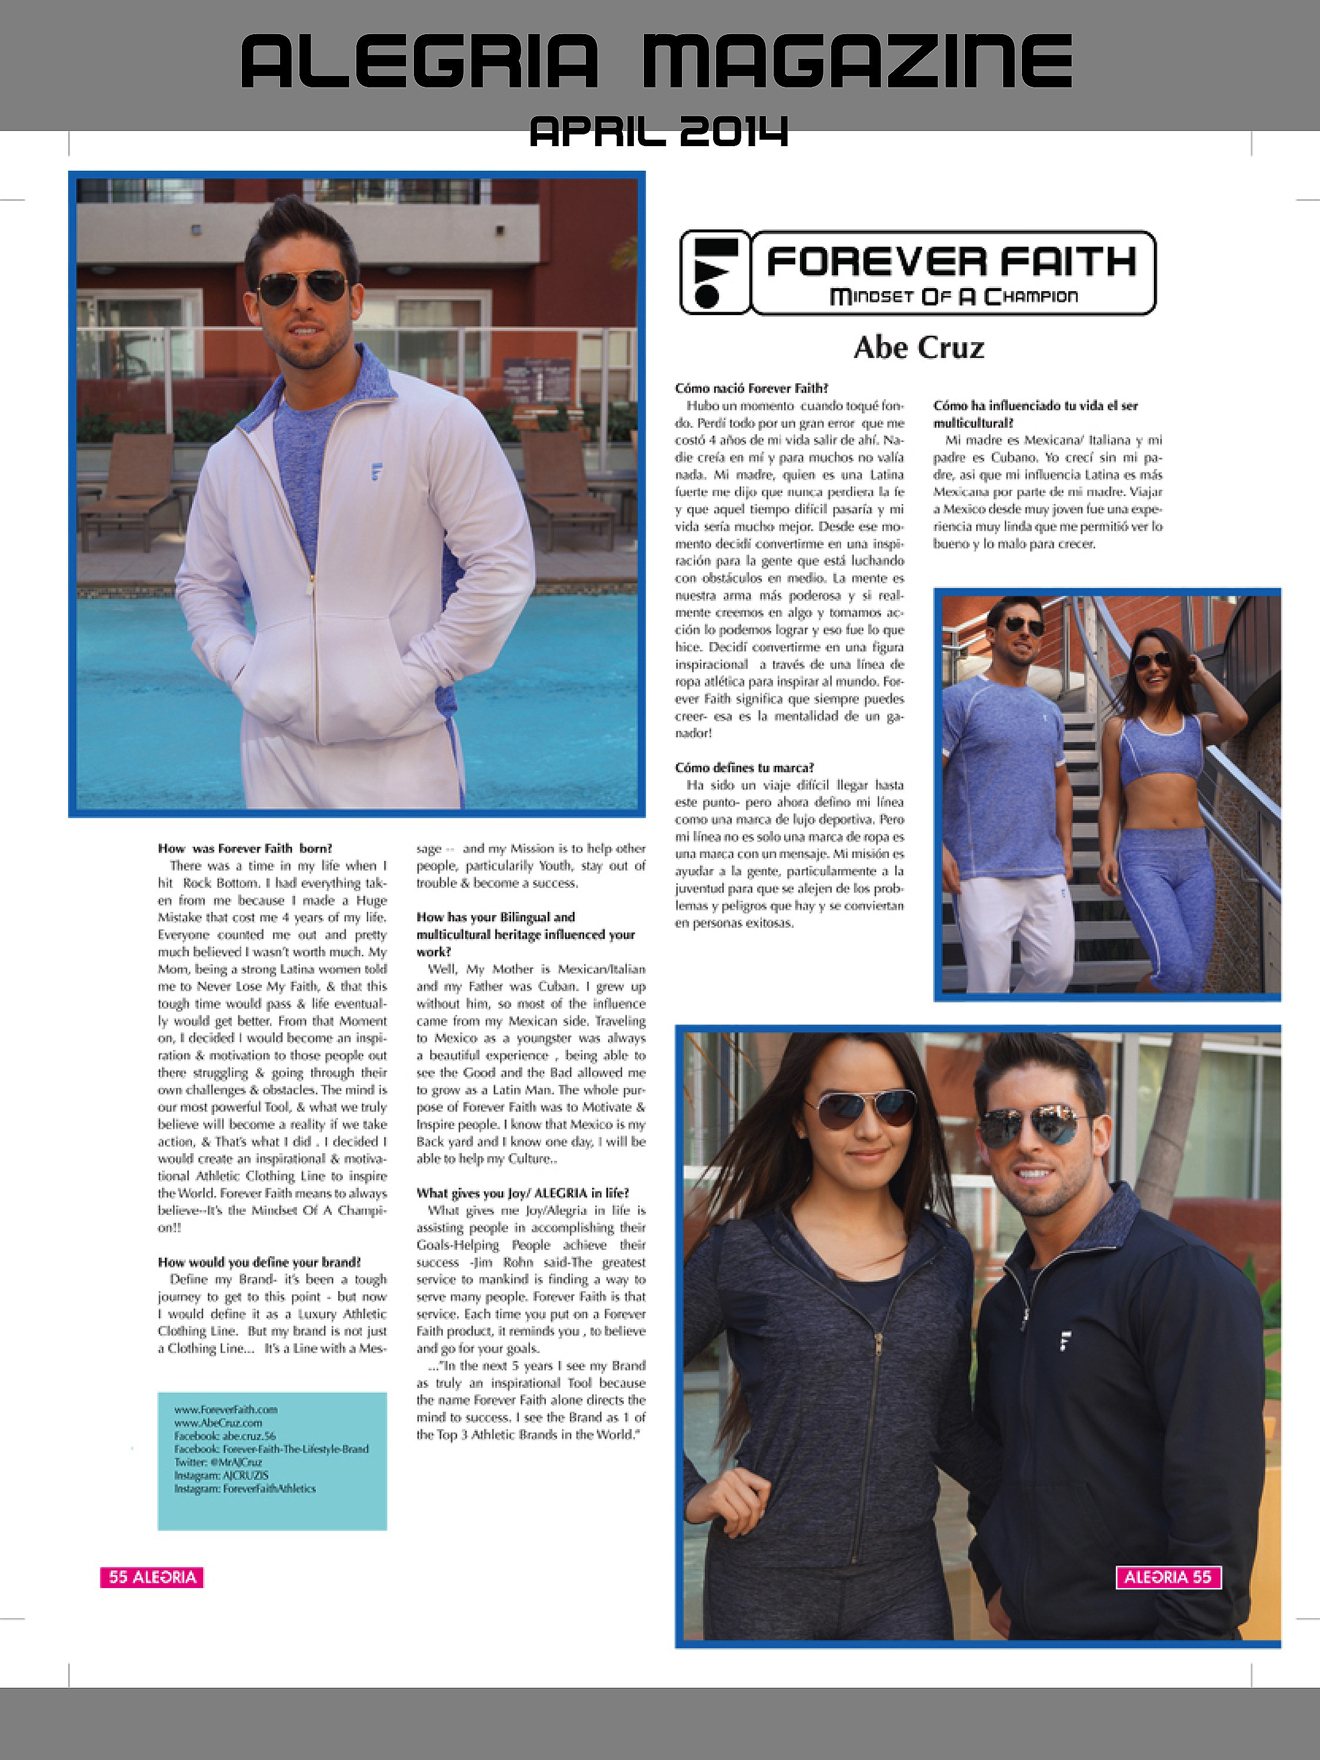 Abe Cruz in Alegria Magazine, April 2014